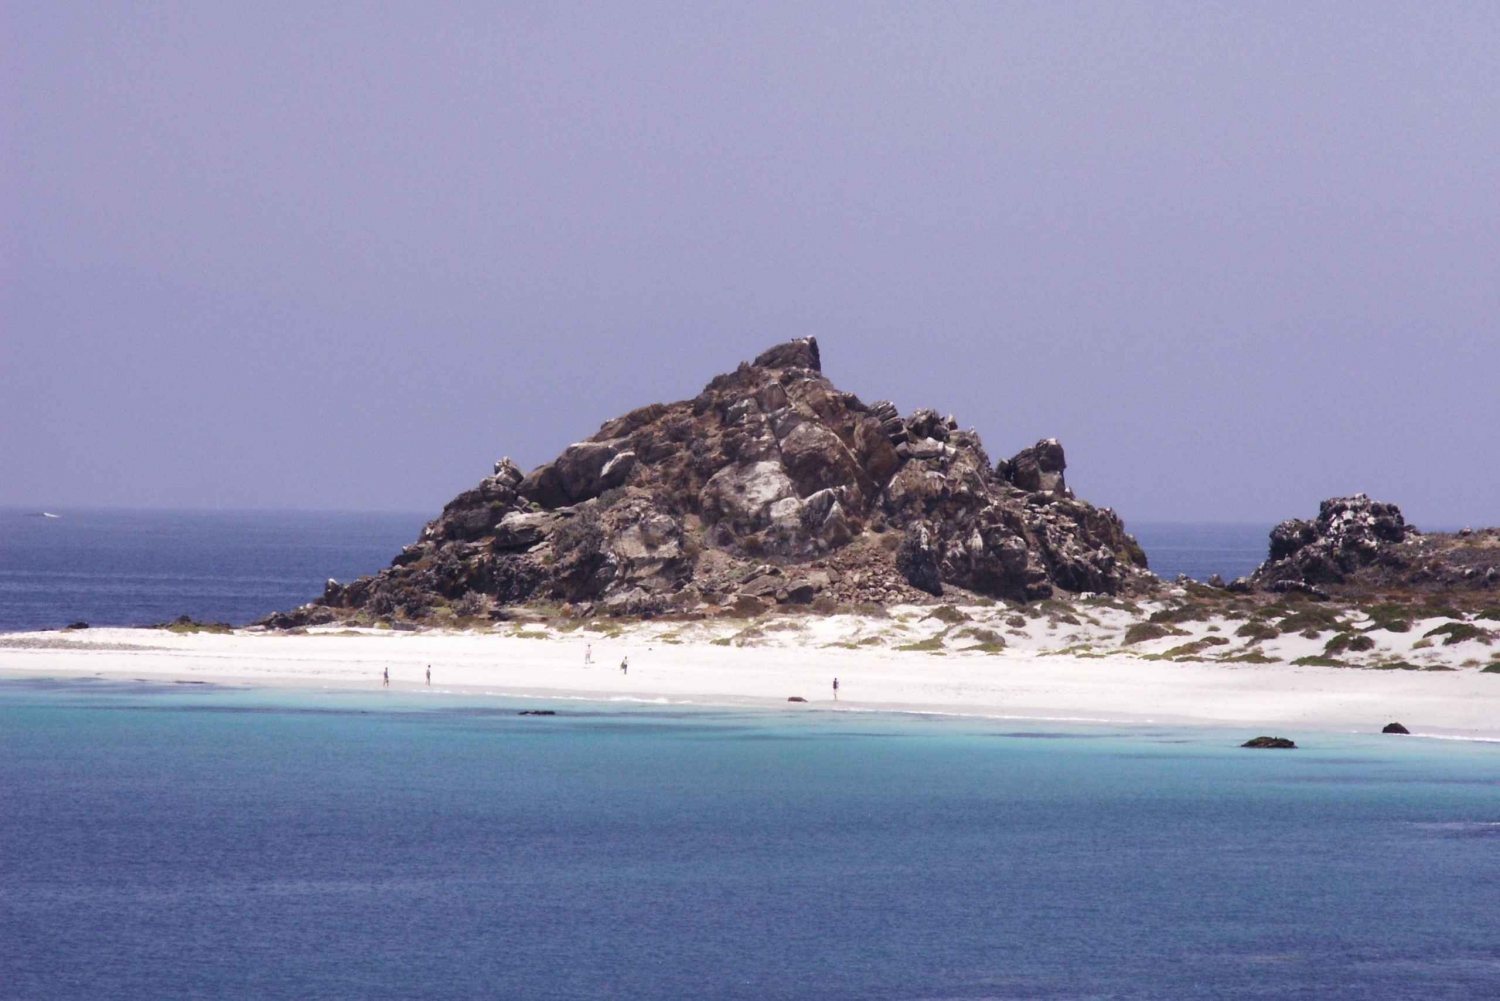 Damas of Chañaral eiland: Walvissen & Humboldtpinguïnreservaat